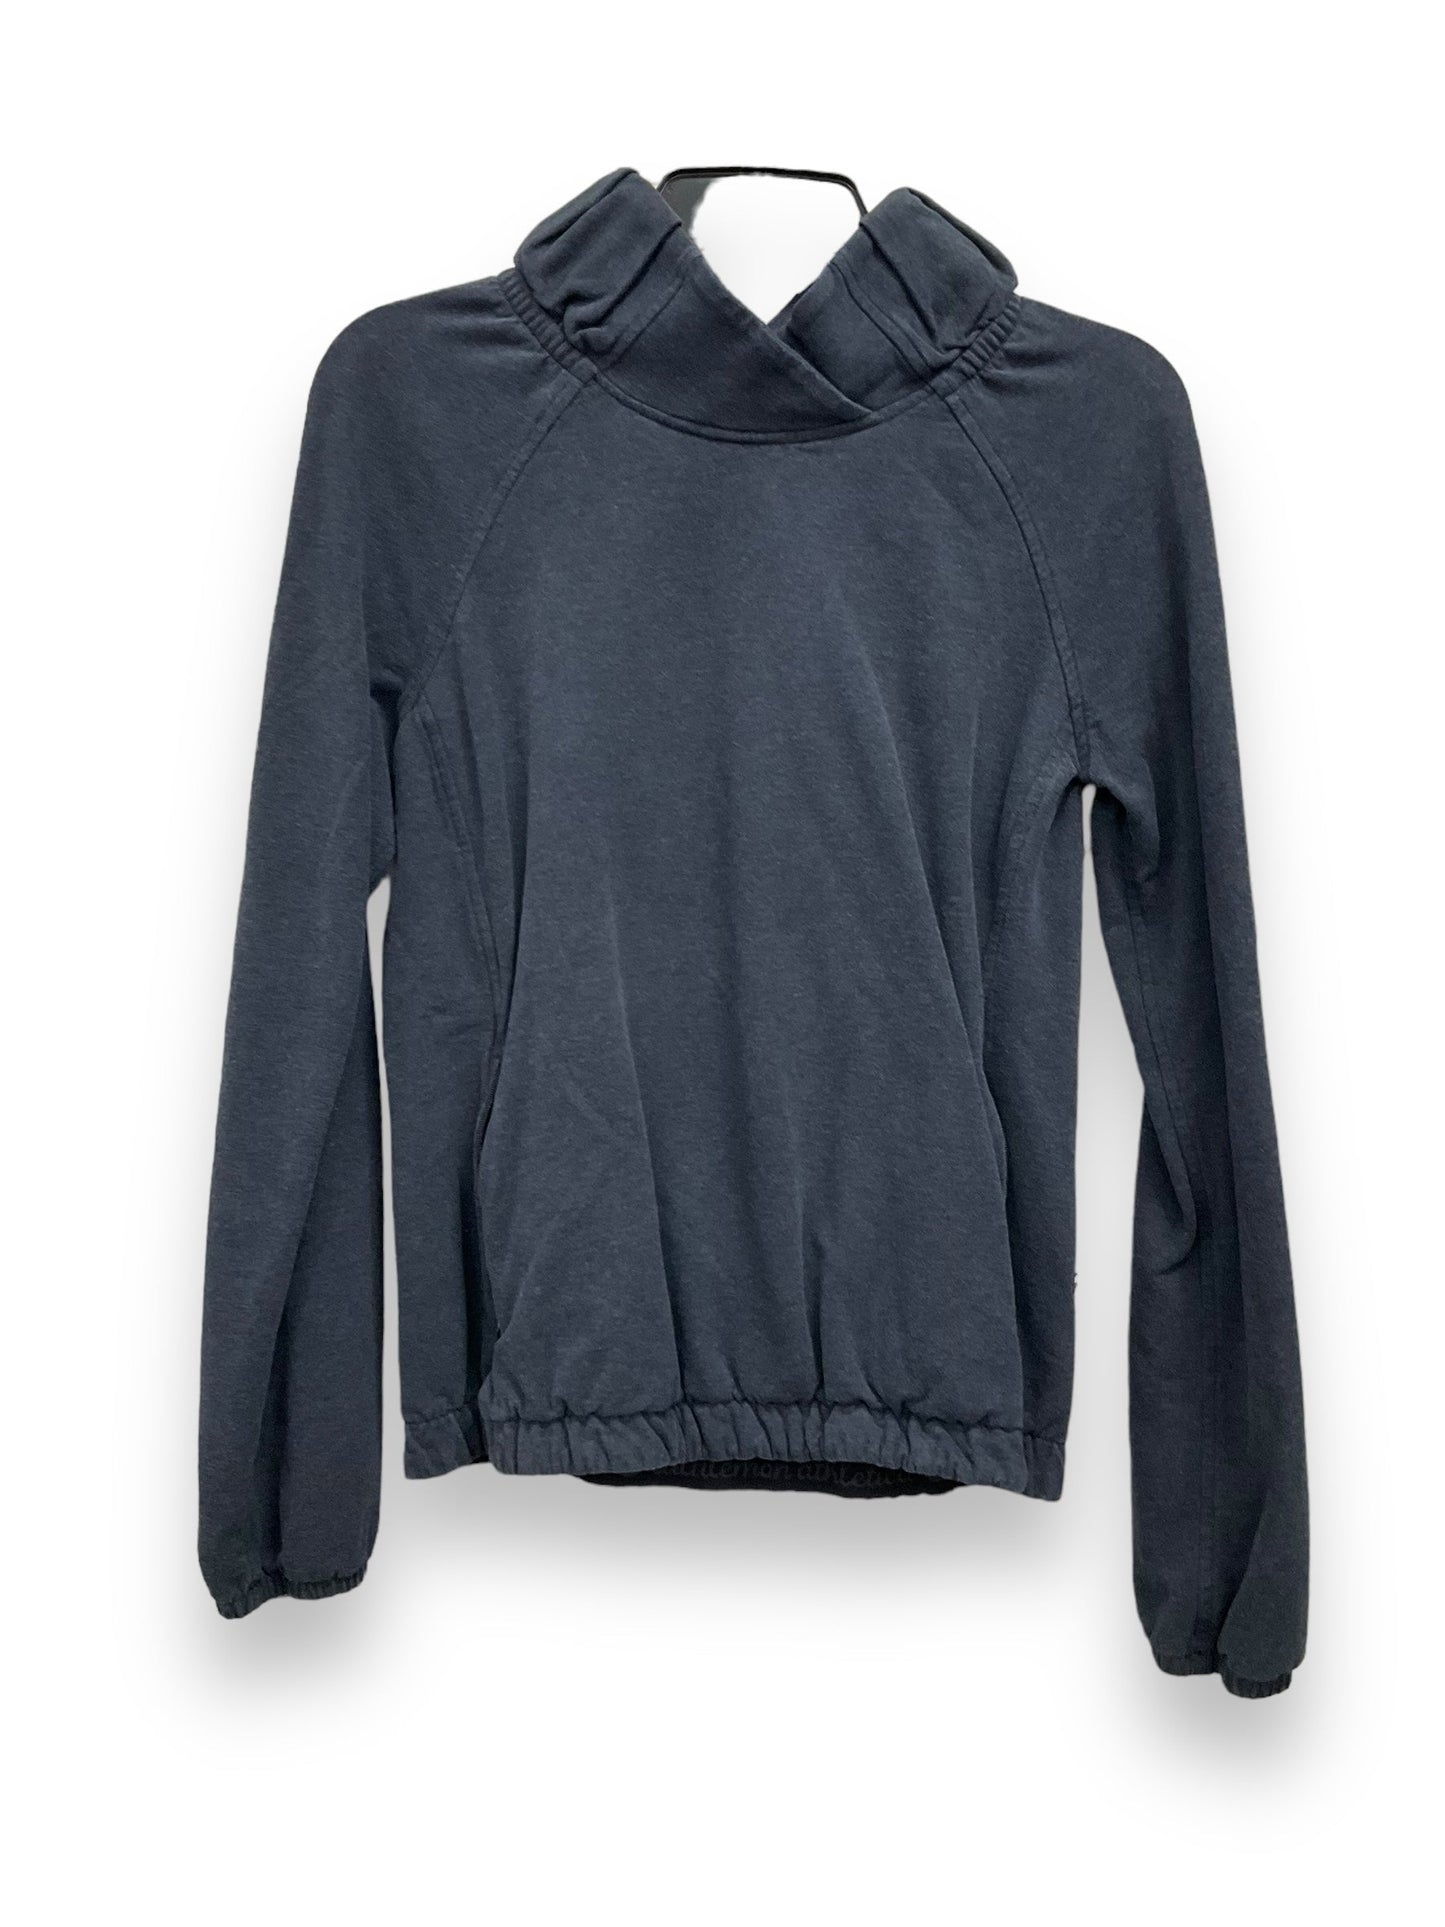 Blue Athletic Sweatshirt Collar Lululemon, Size 6